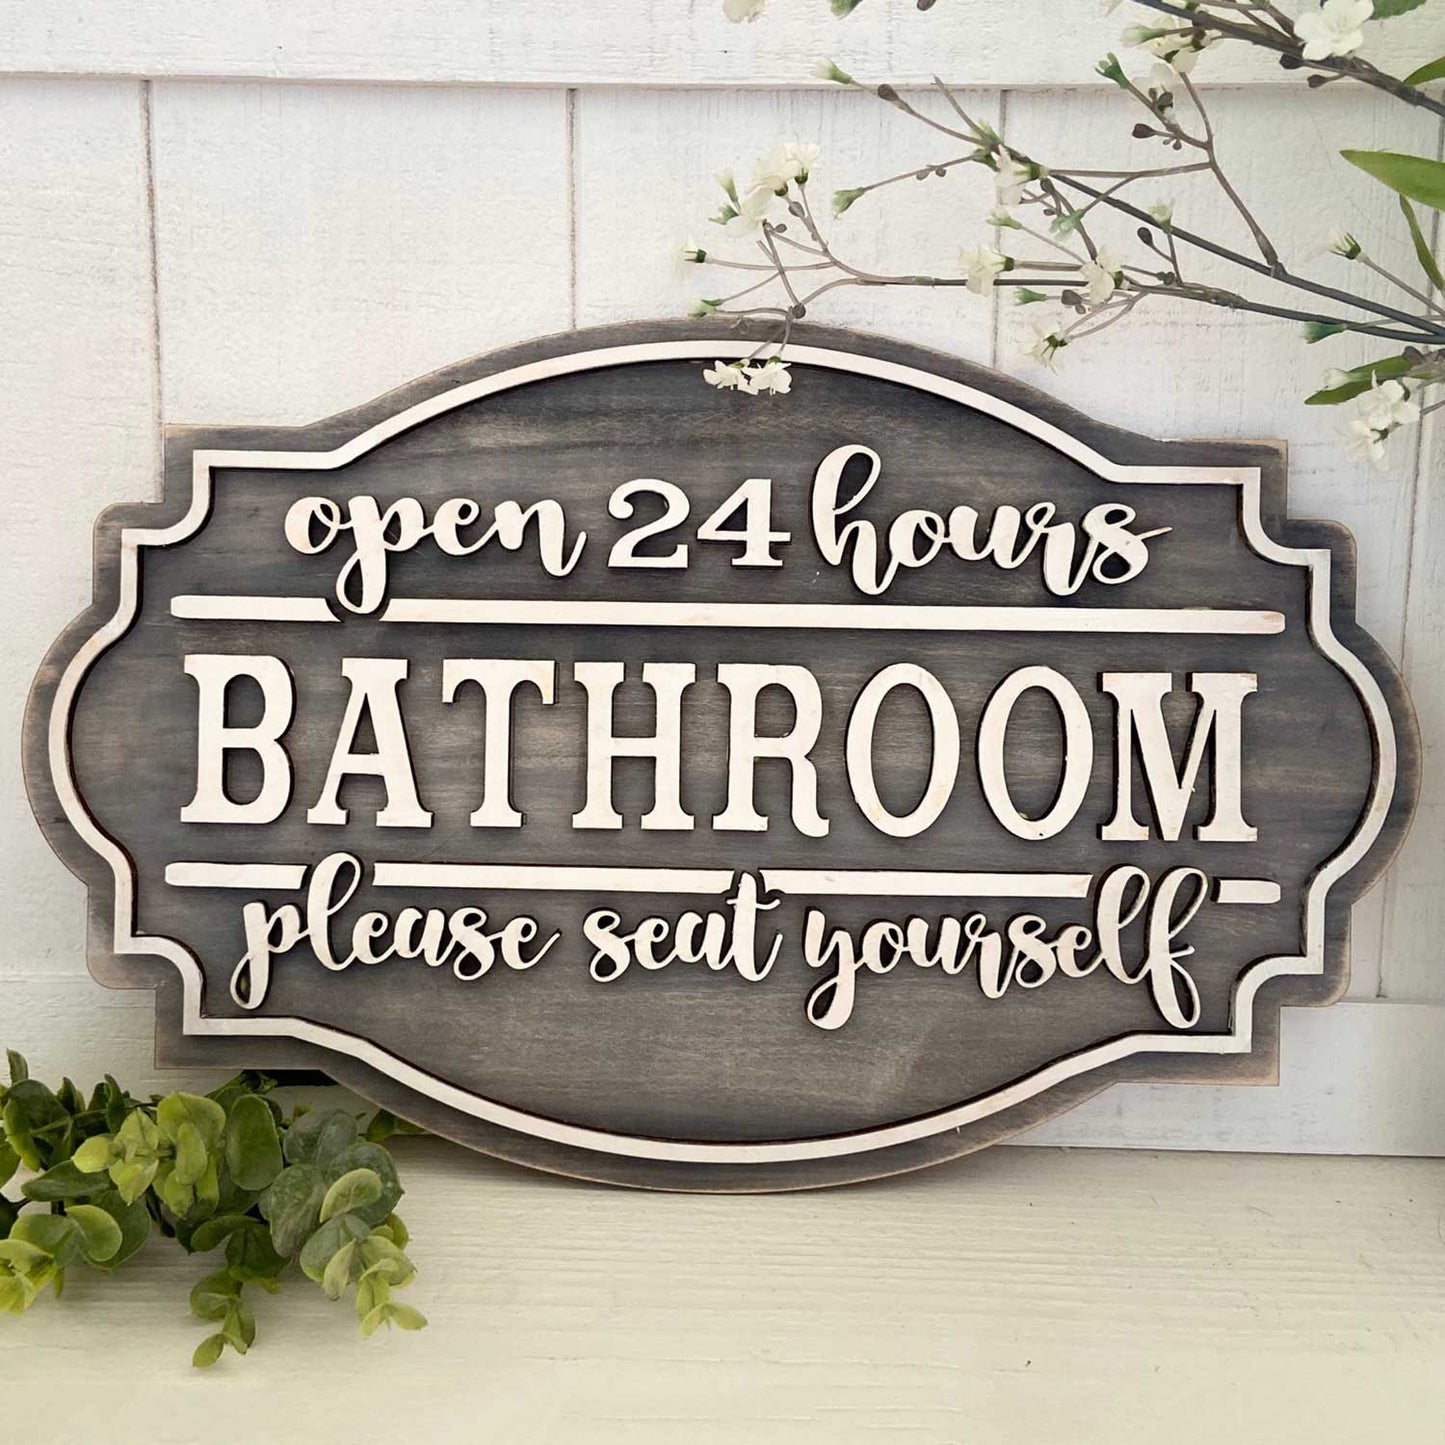 Farmhouse Bathroom Door Sign - "Please Seat Yourself" Sign